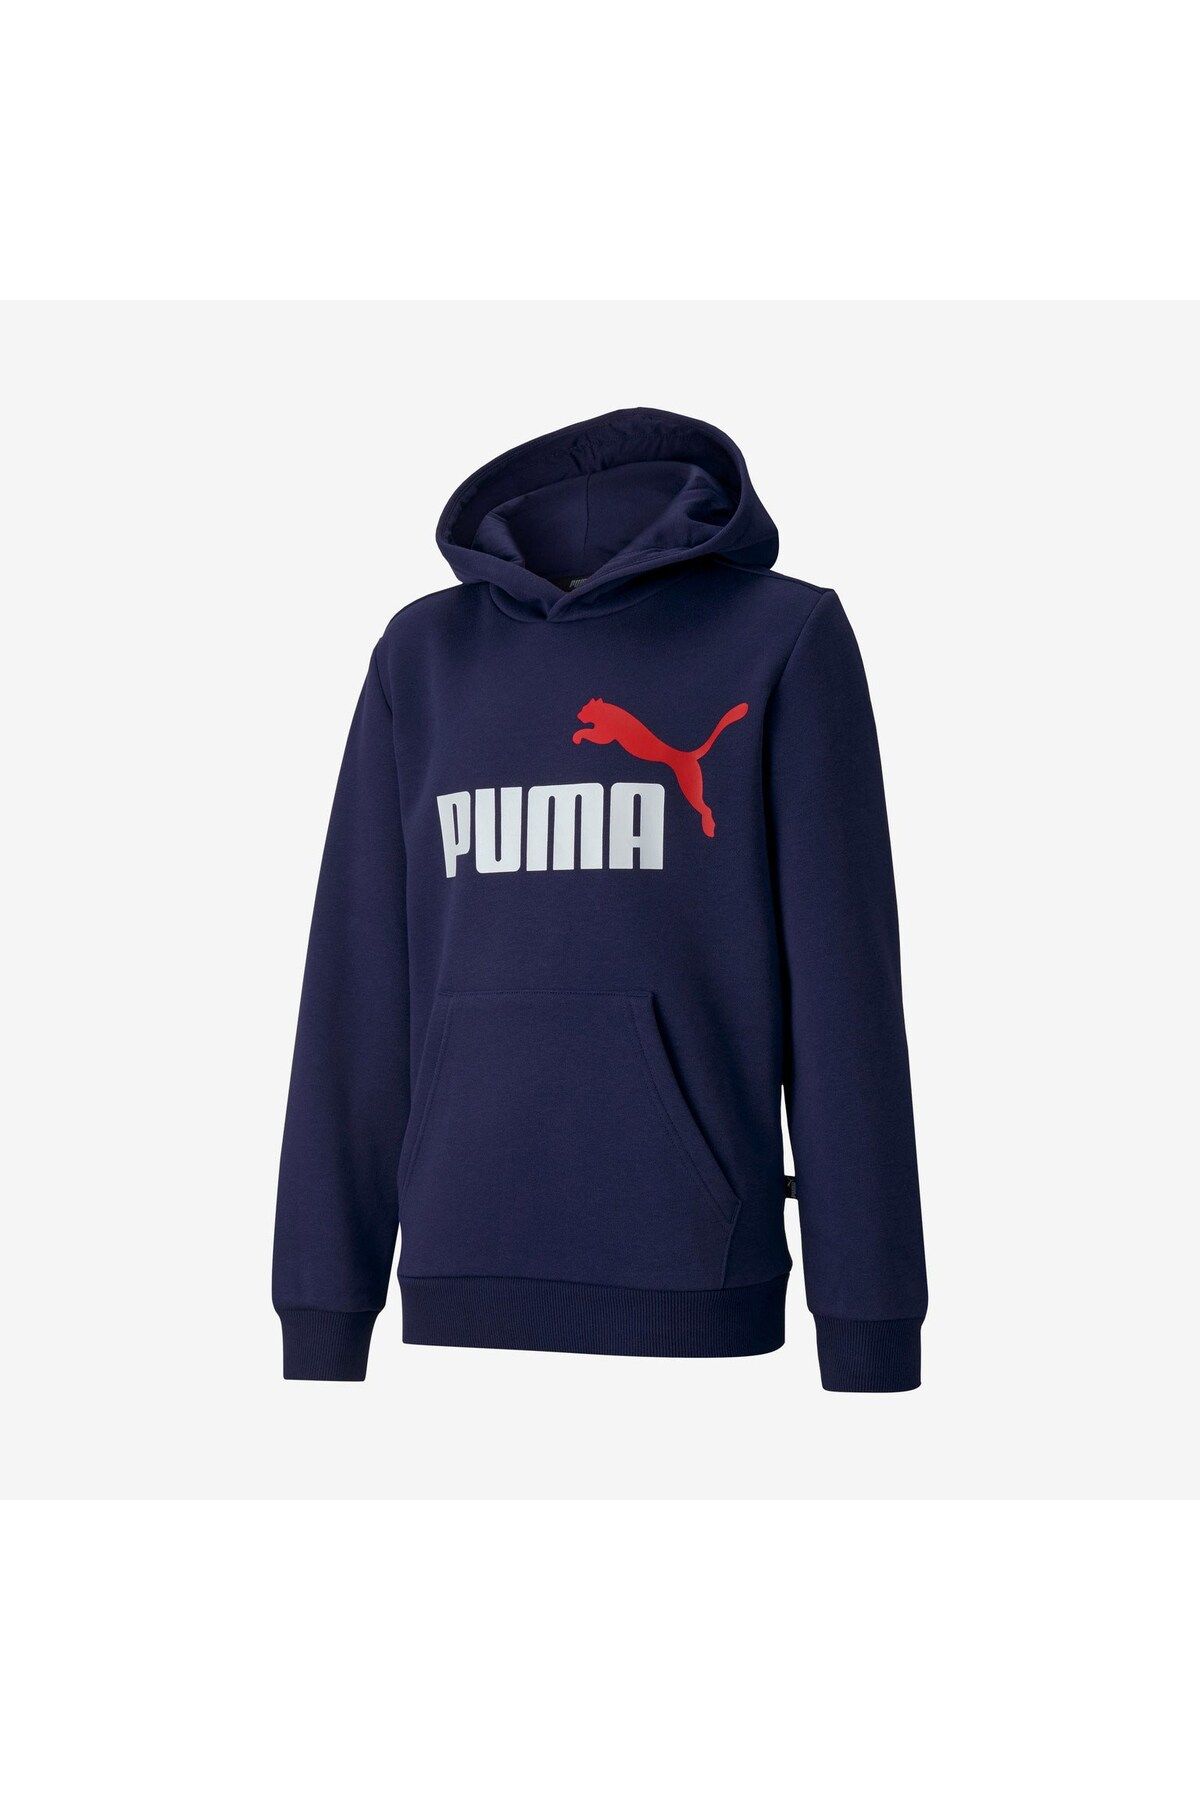 Puma Essentials 2 Col Fleece Erkek Çocuk Lacivert Kapüşonlu Sweatshirt